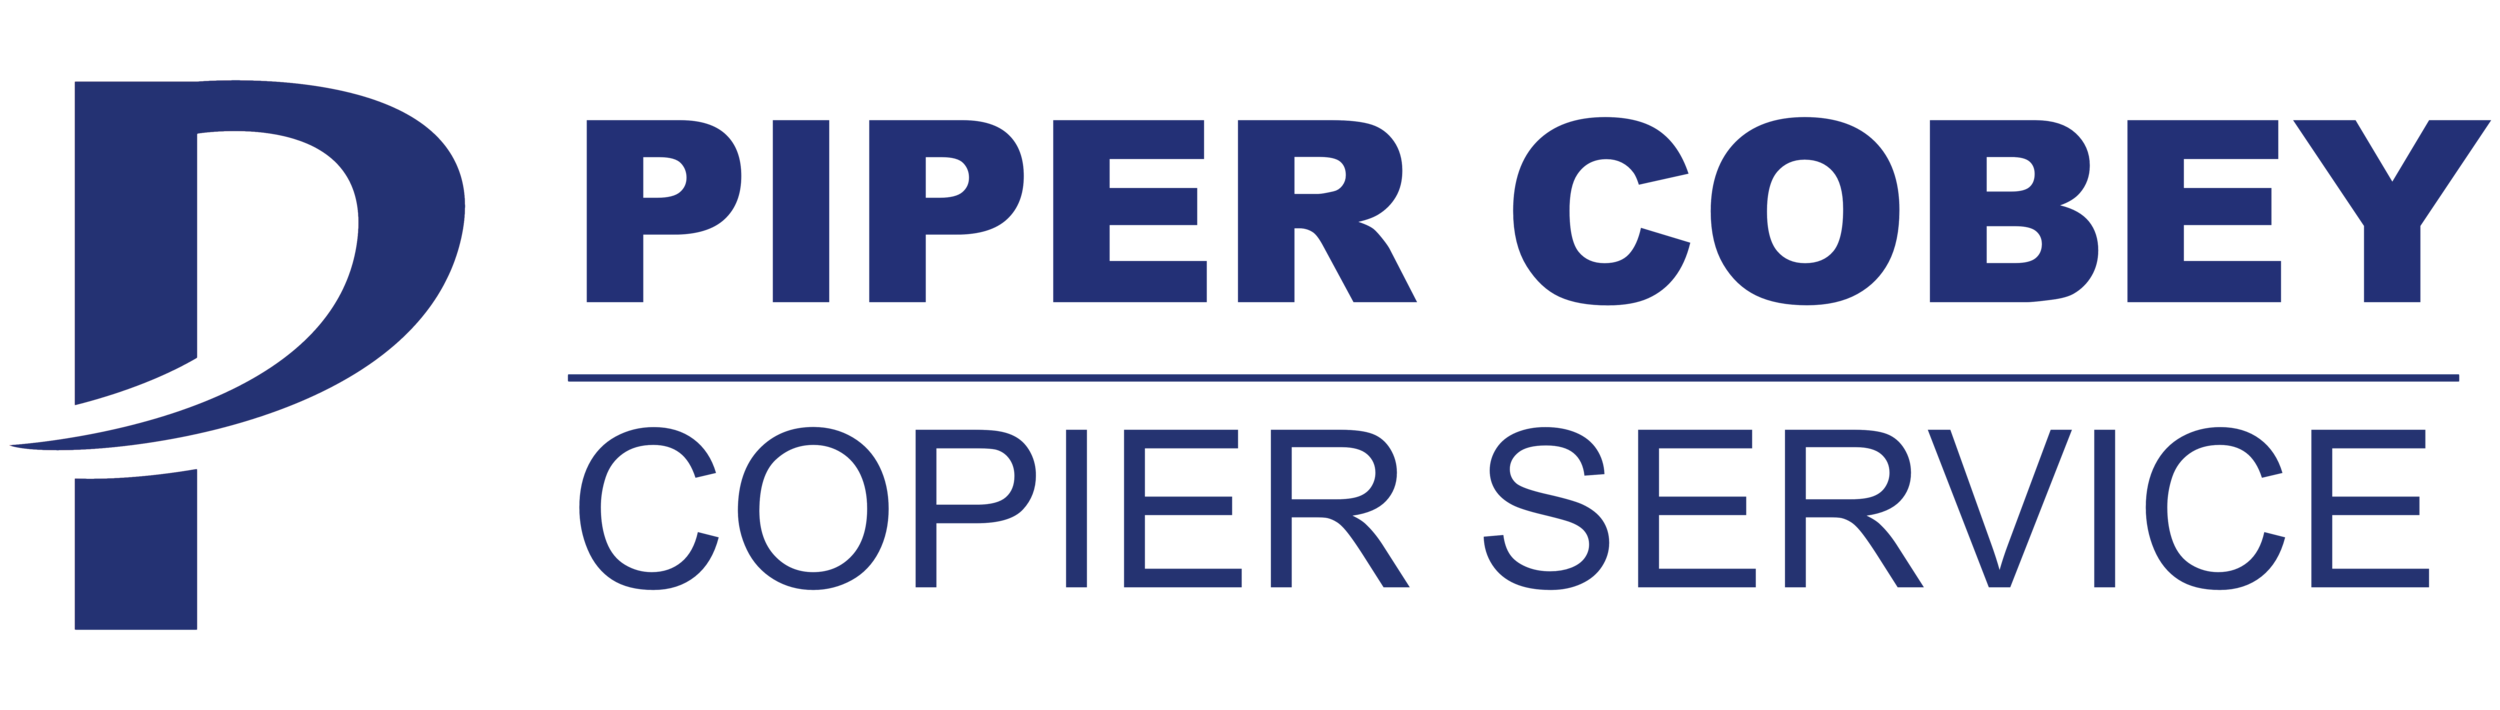 Piper Cobey Copier Service